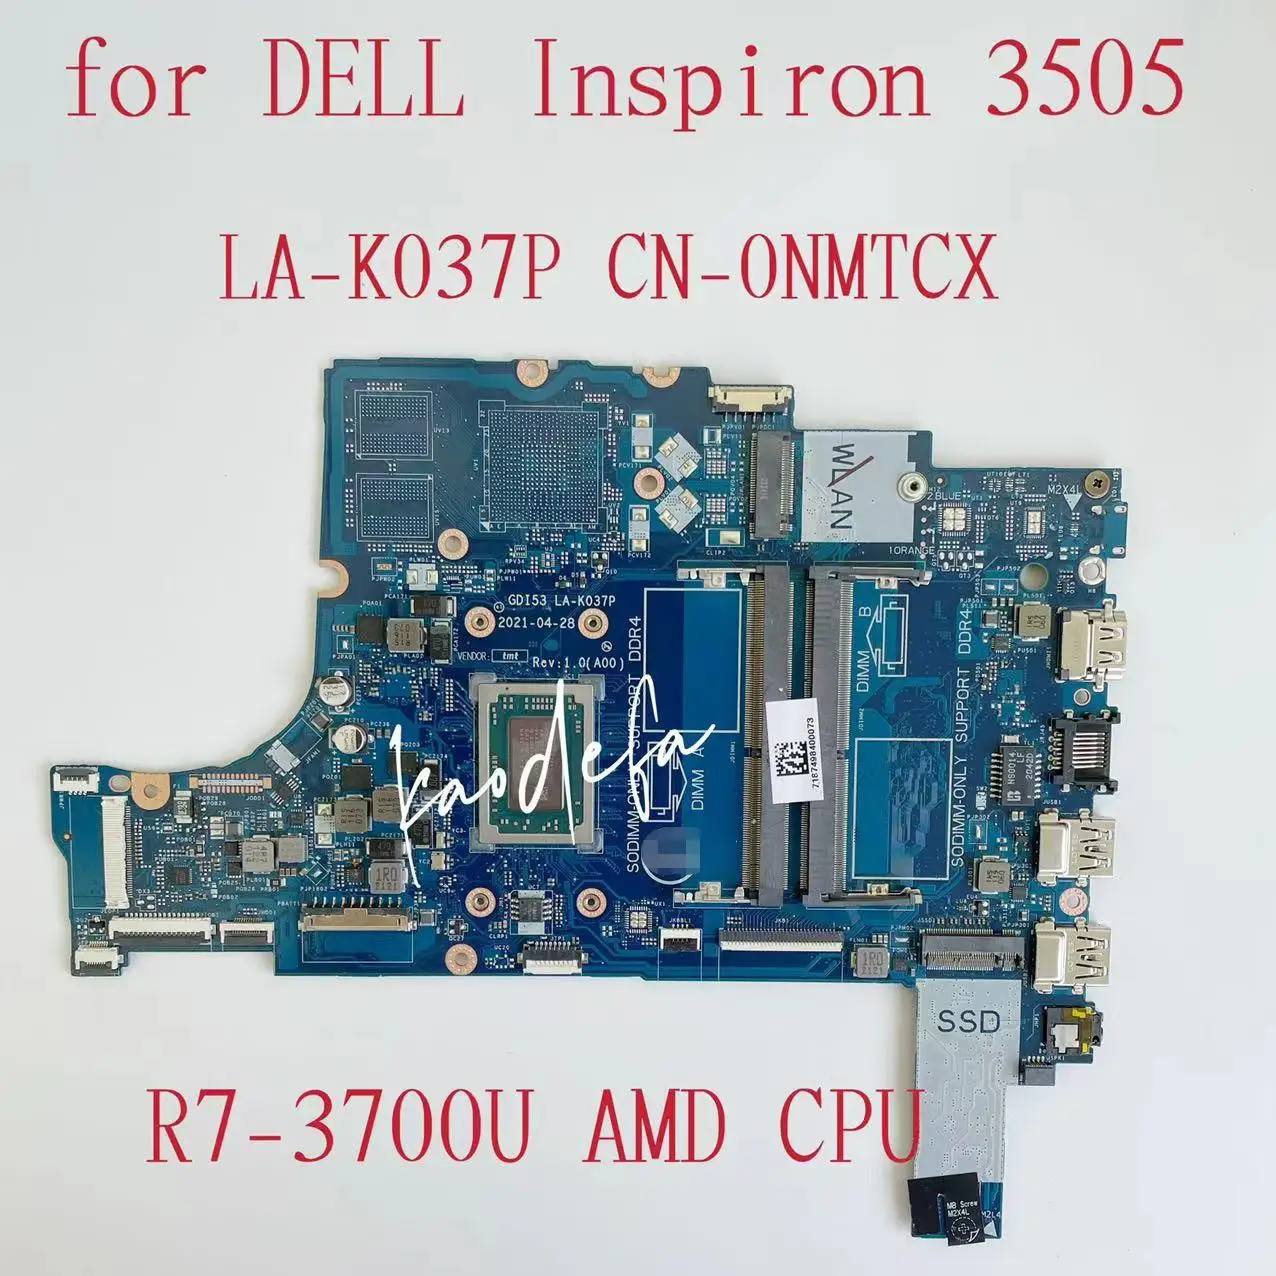 

Материнская плата CDI53 для ноутбука Dell Inspiron 3505, системная плата для ноутбука: Φ AMD DDR4 LA-K037P 0NMTCX 100%, тест ОК